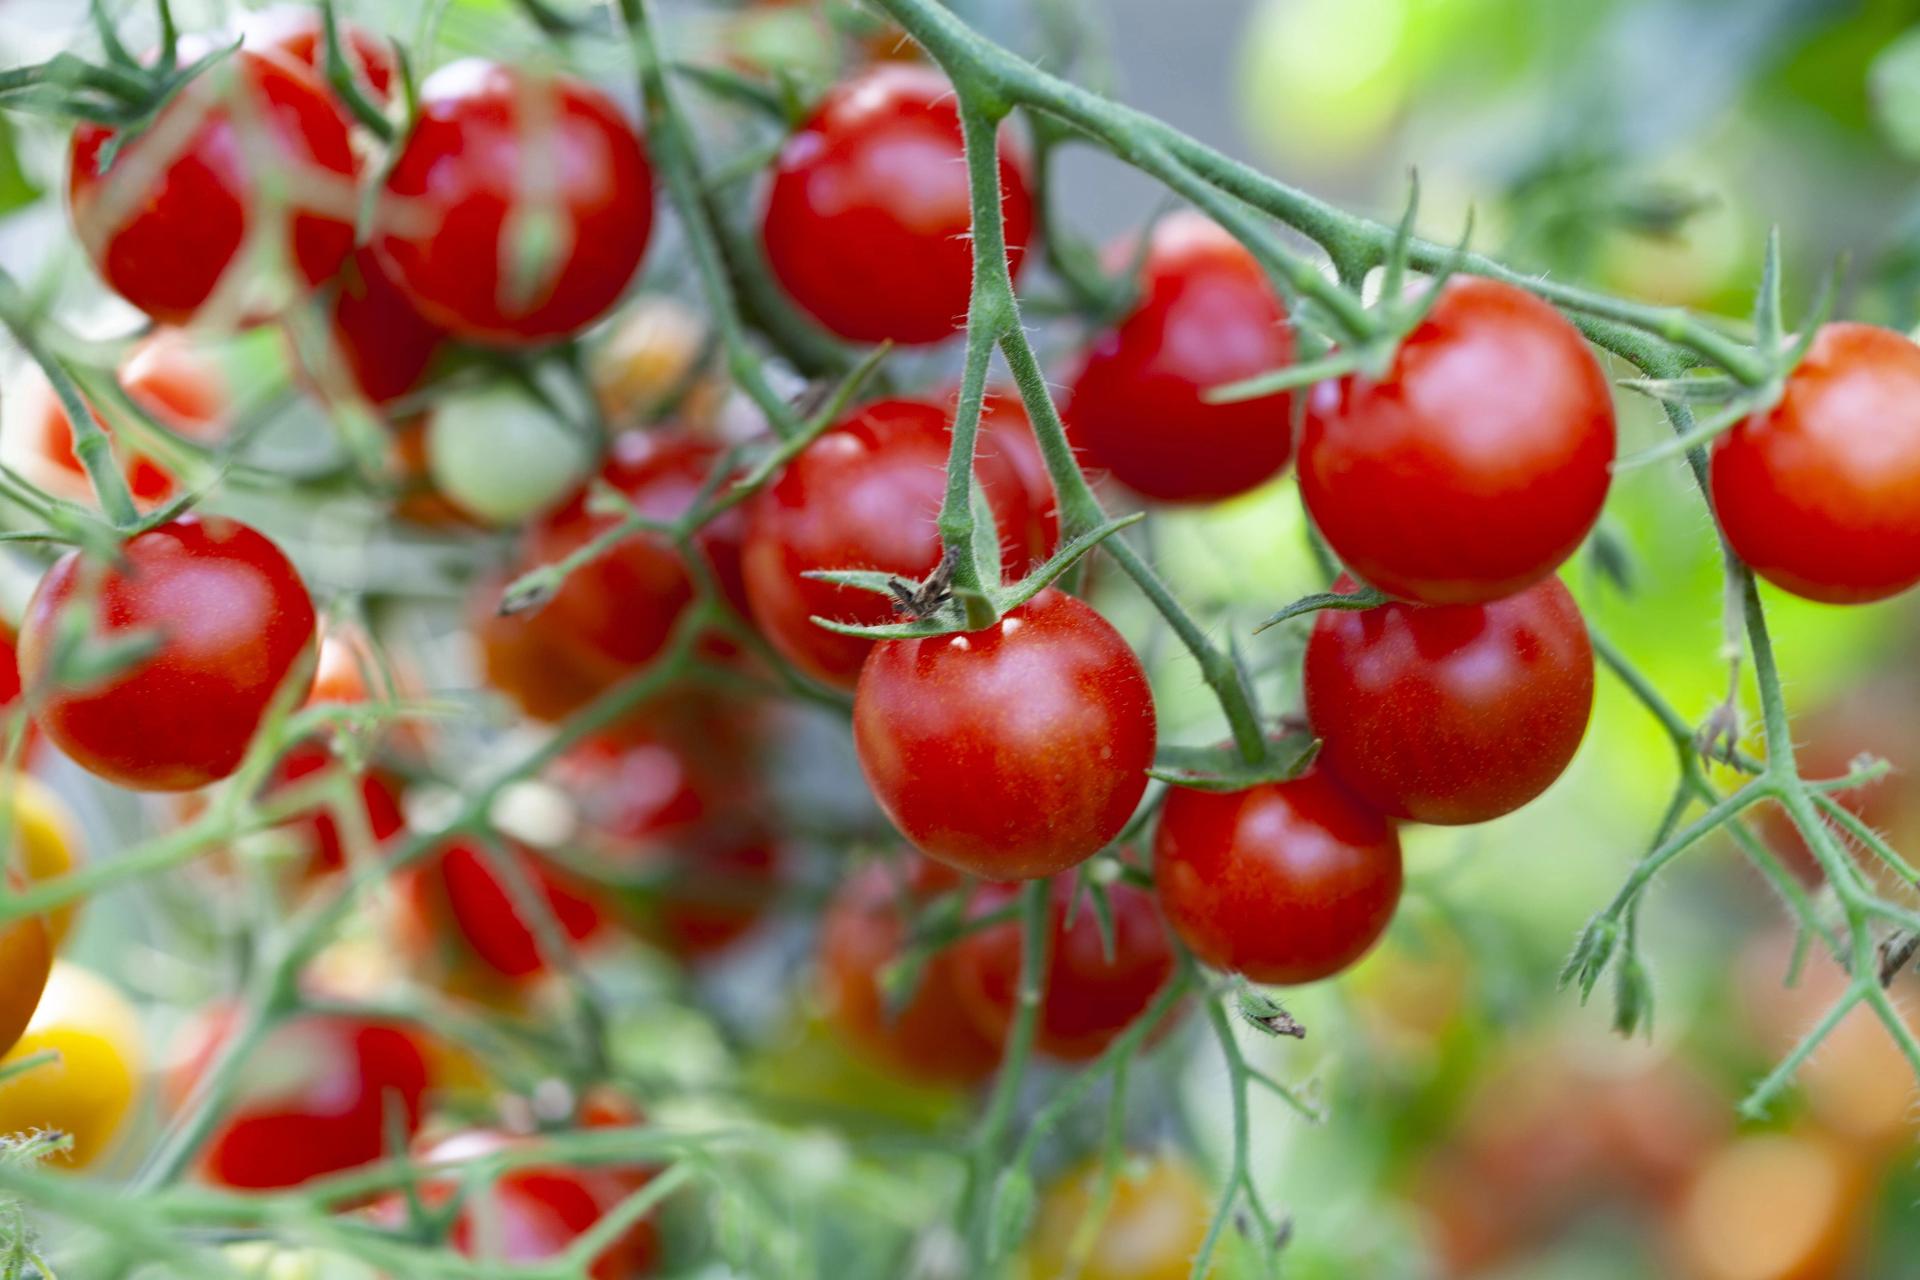 tomatoes-on-green-plant-2021-08-26-18-12-01-utc-min.jpg